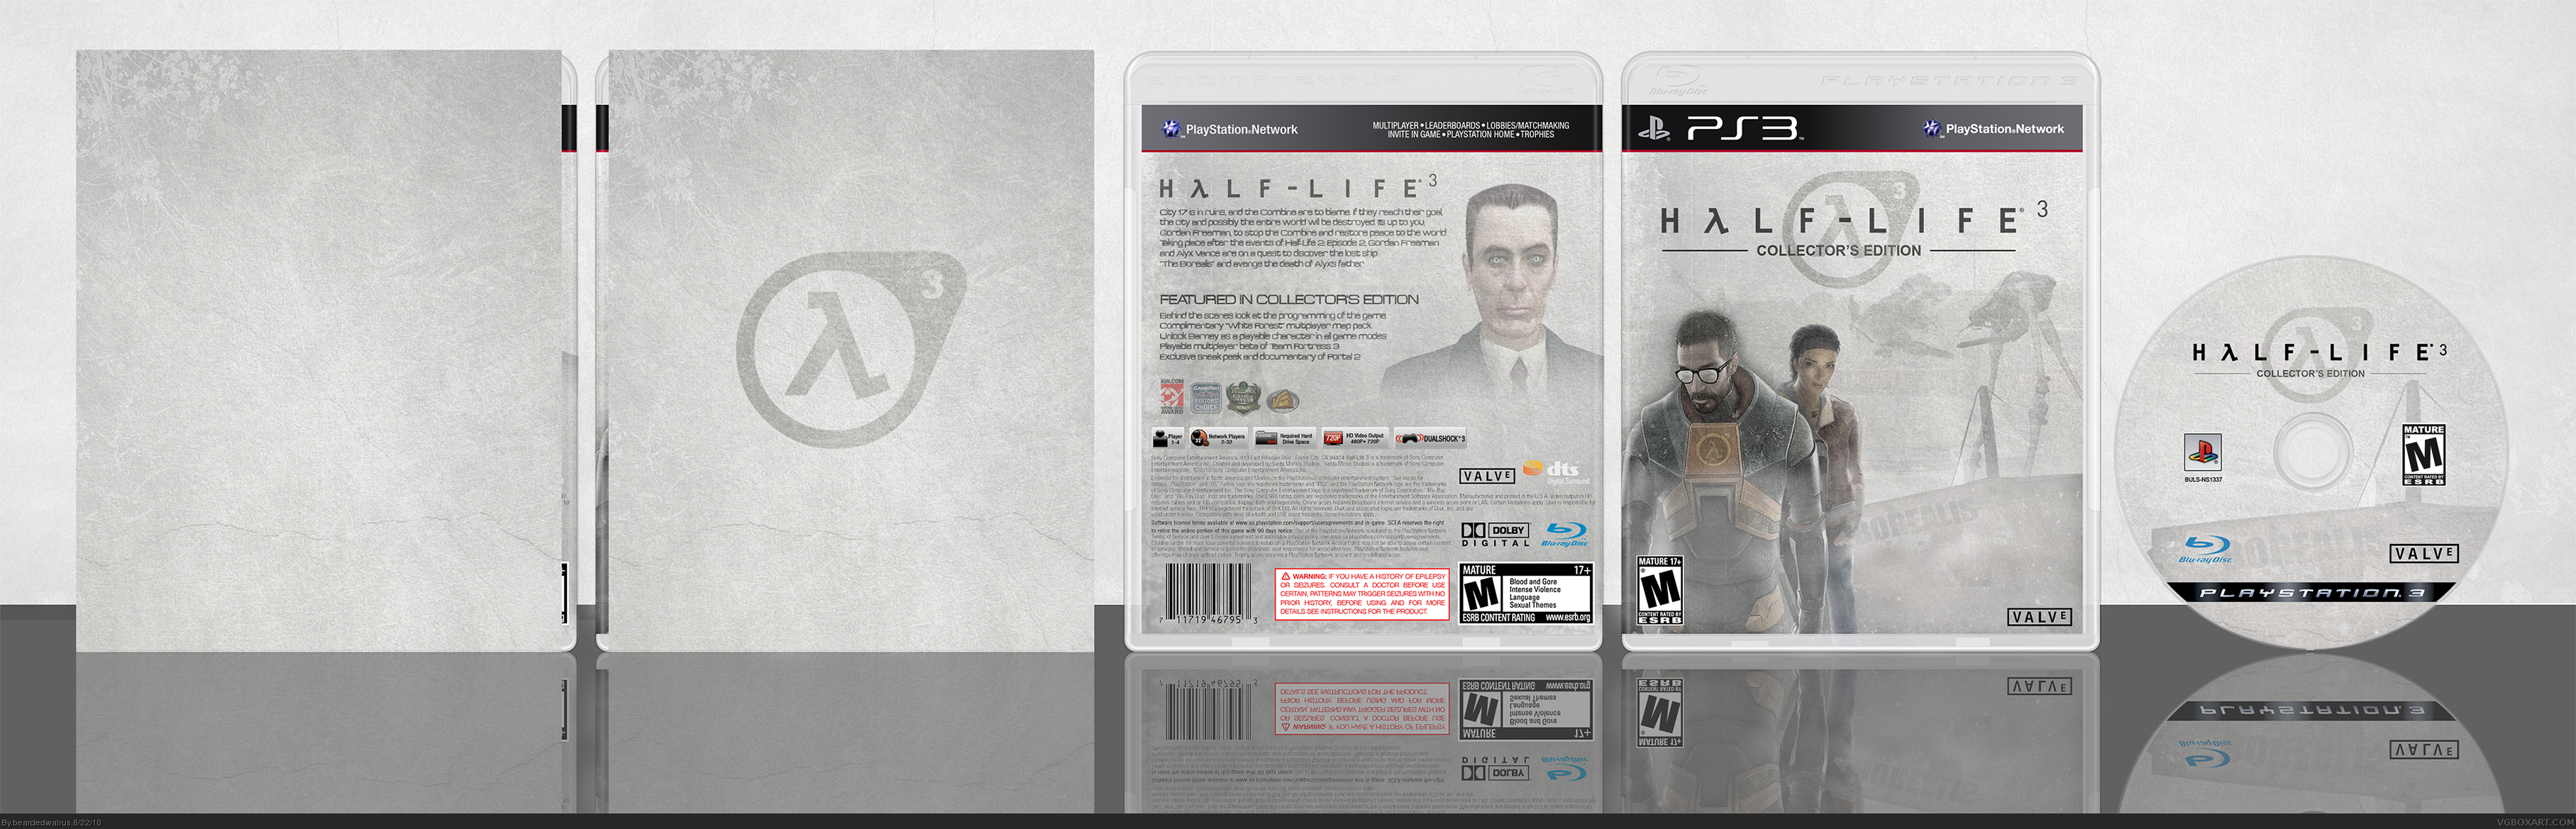 Half-Life 3: Collector's Edition box cover